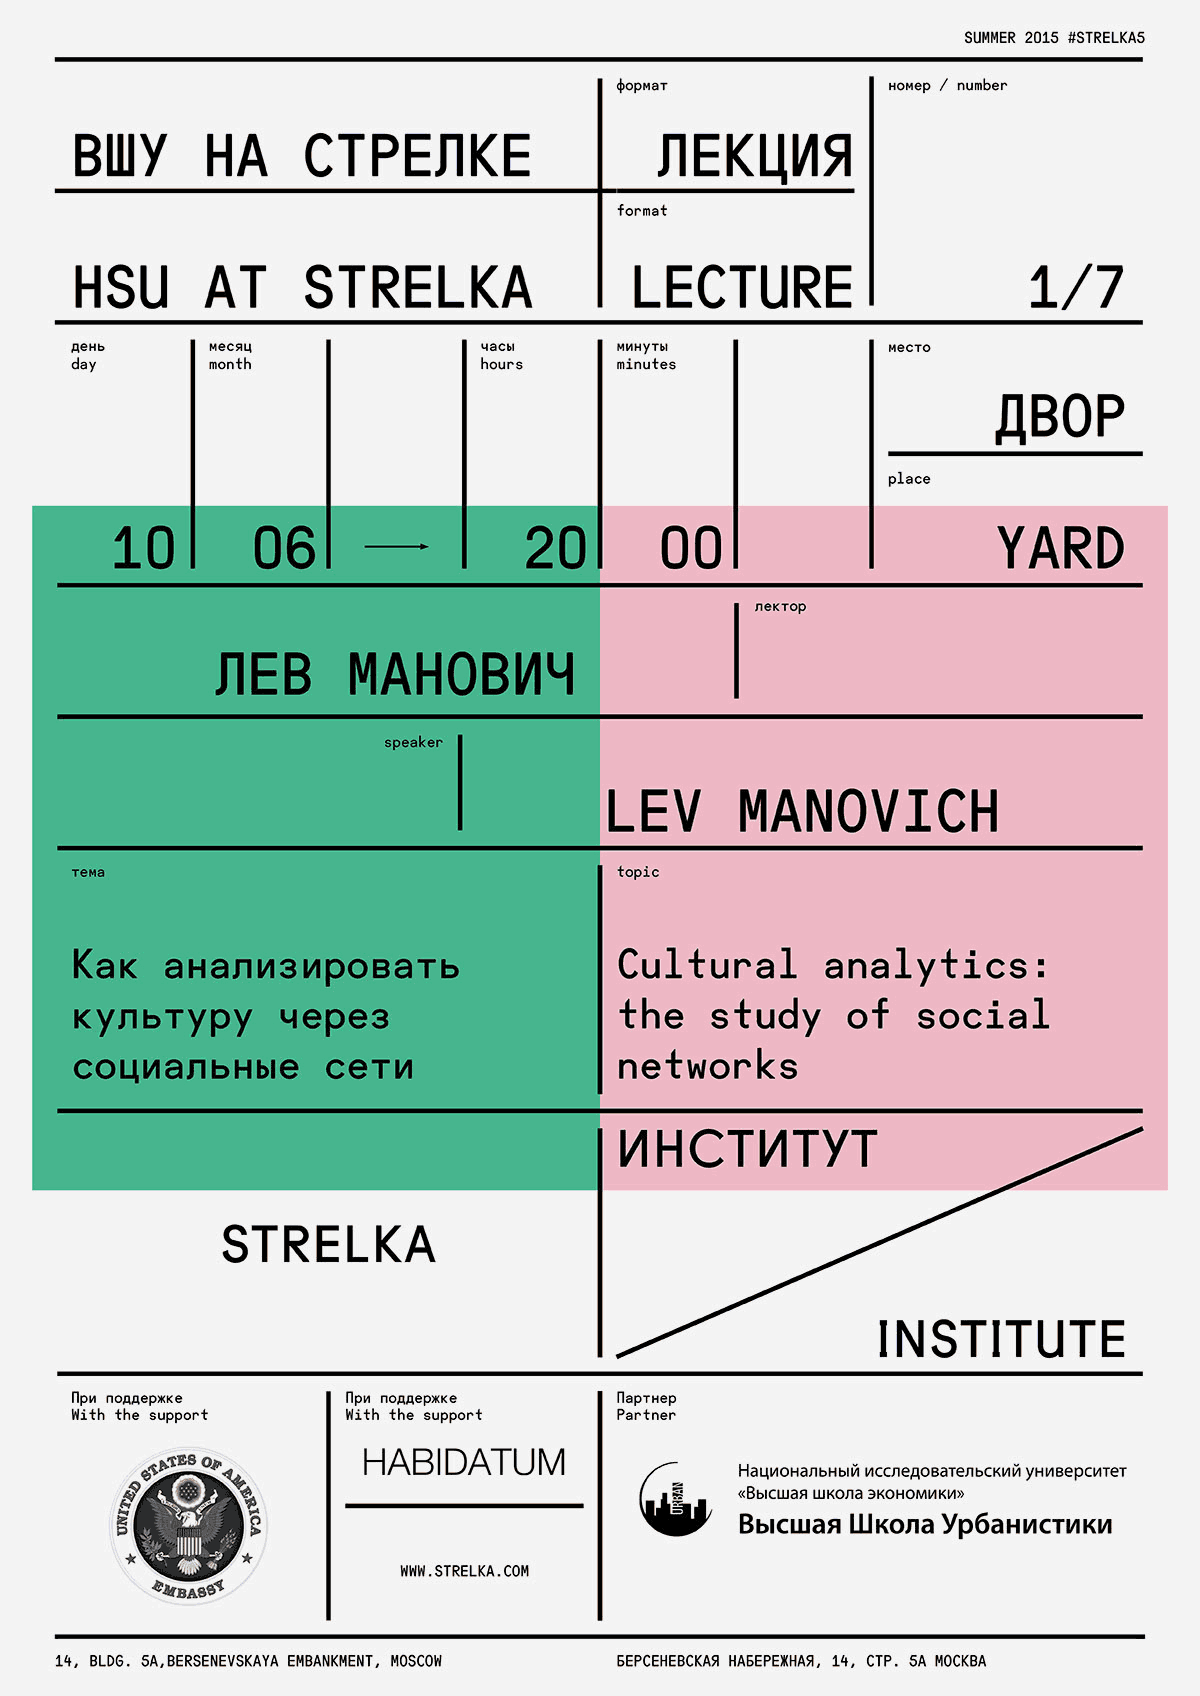 High School of Urbanism at Strelka Institute